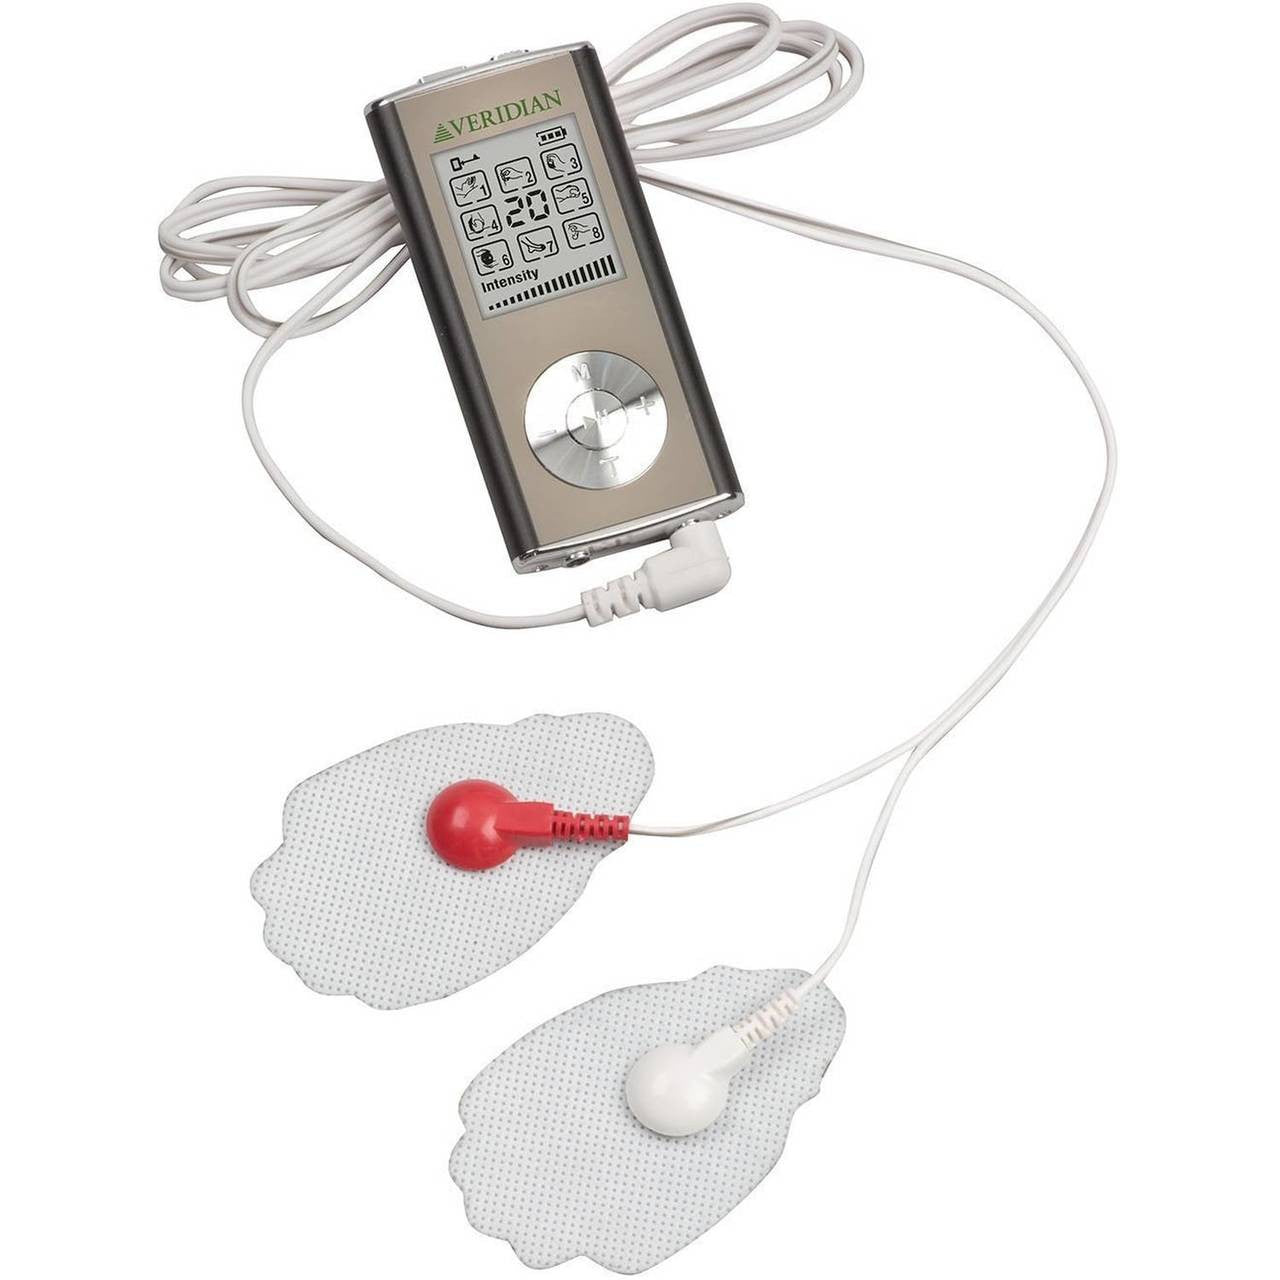 TENS Device - Portable Muscle Stimulator - Vive Health